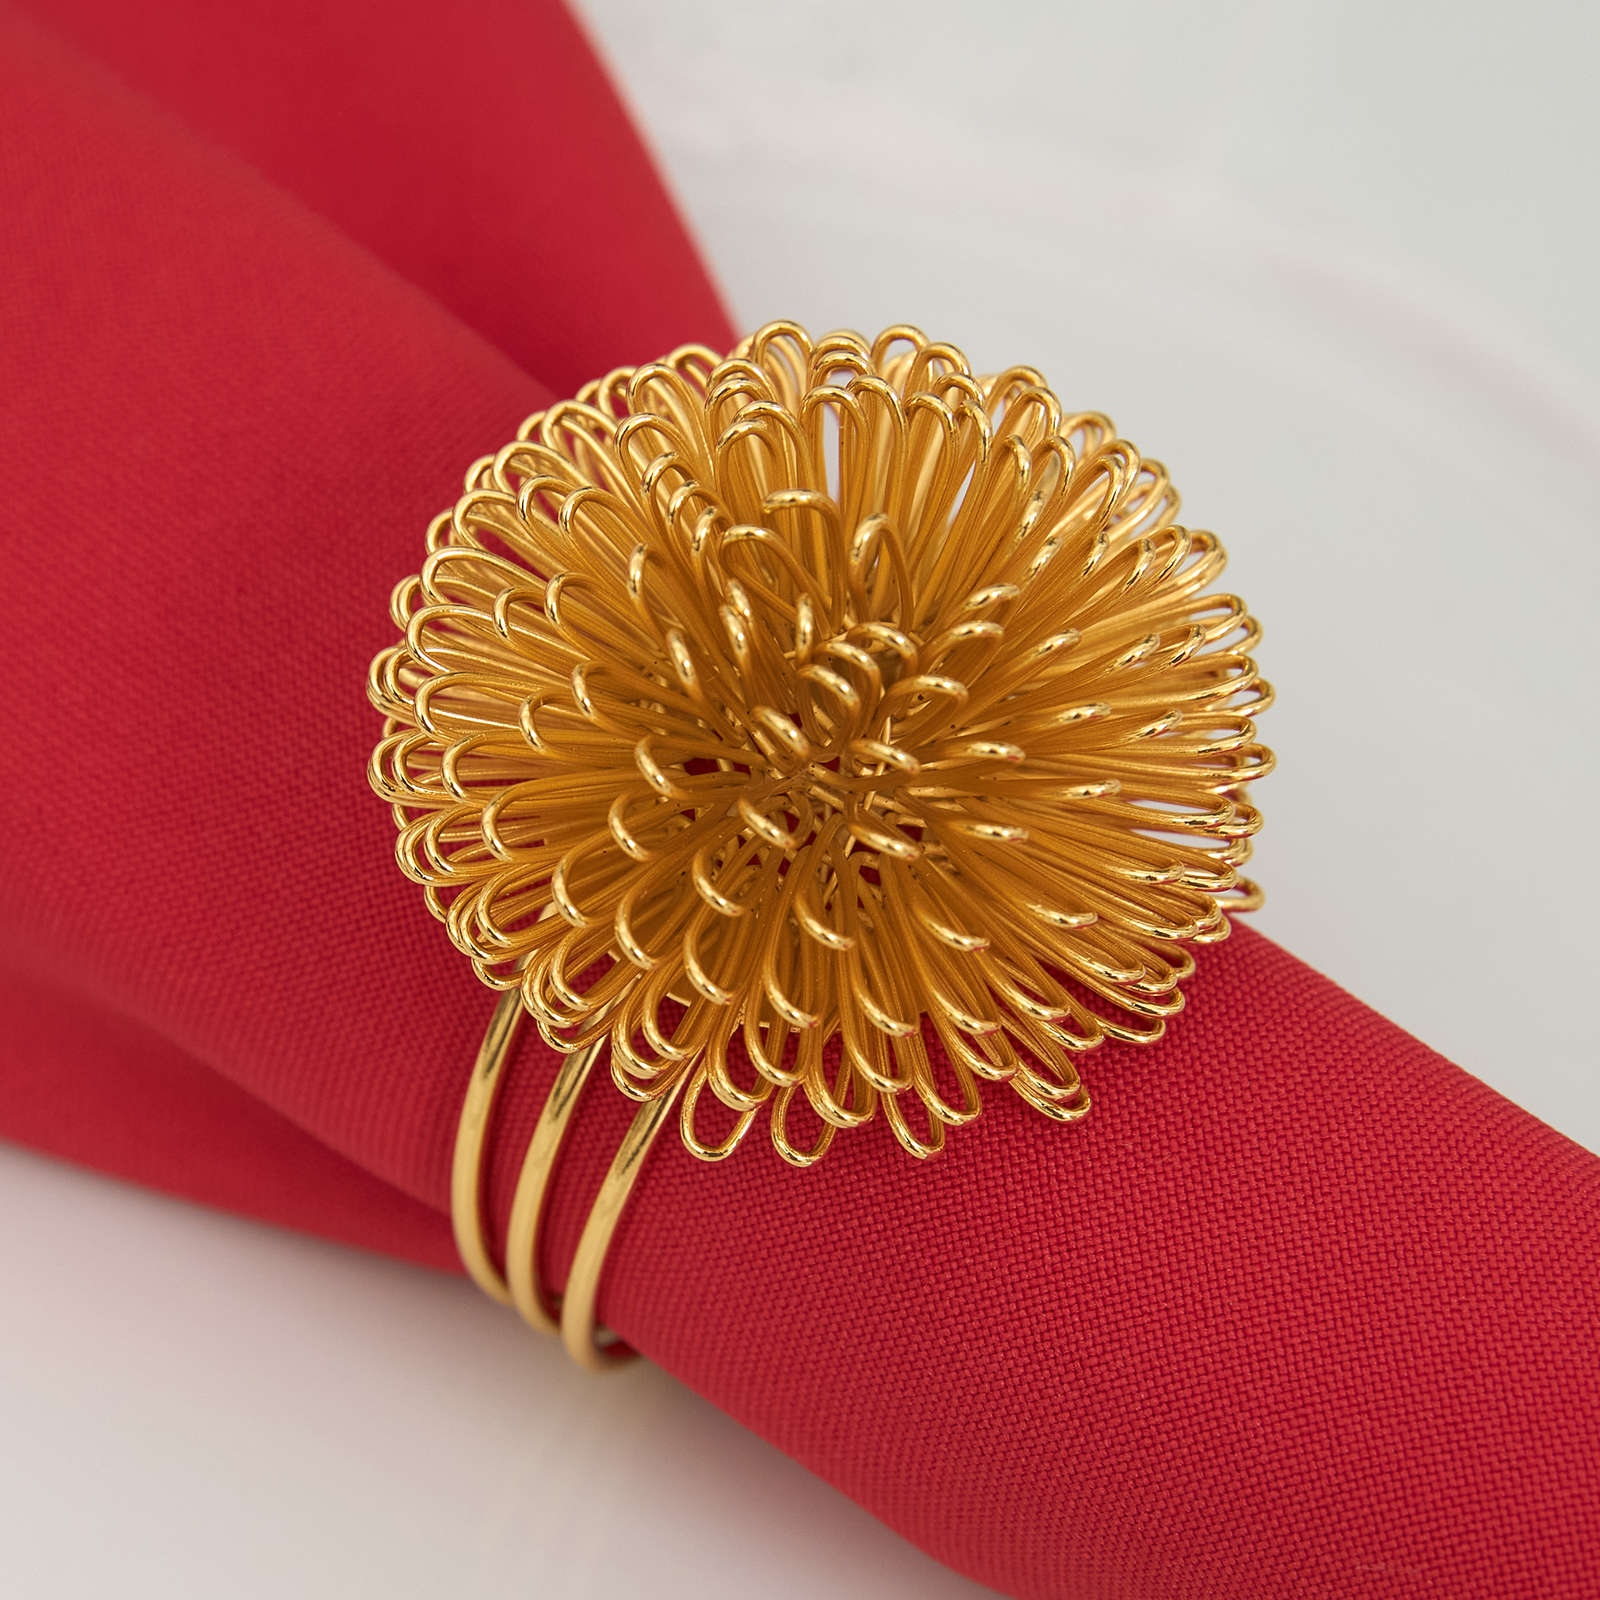 Набор колец Gold flower для салфеток набор медных колец для салфеток ромашка